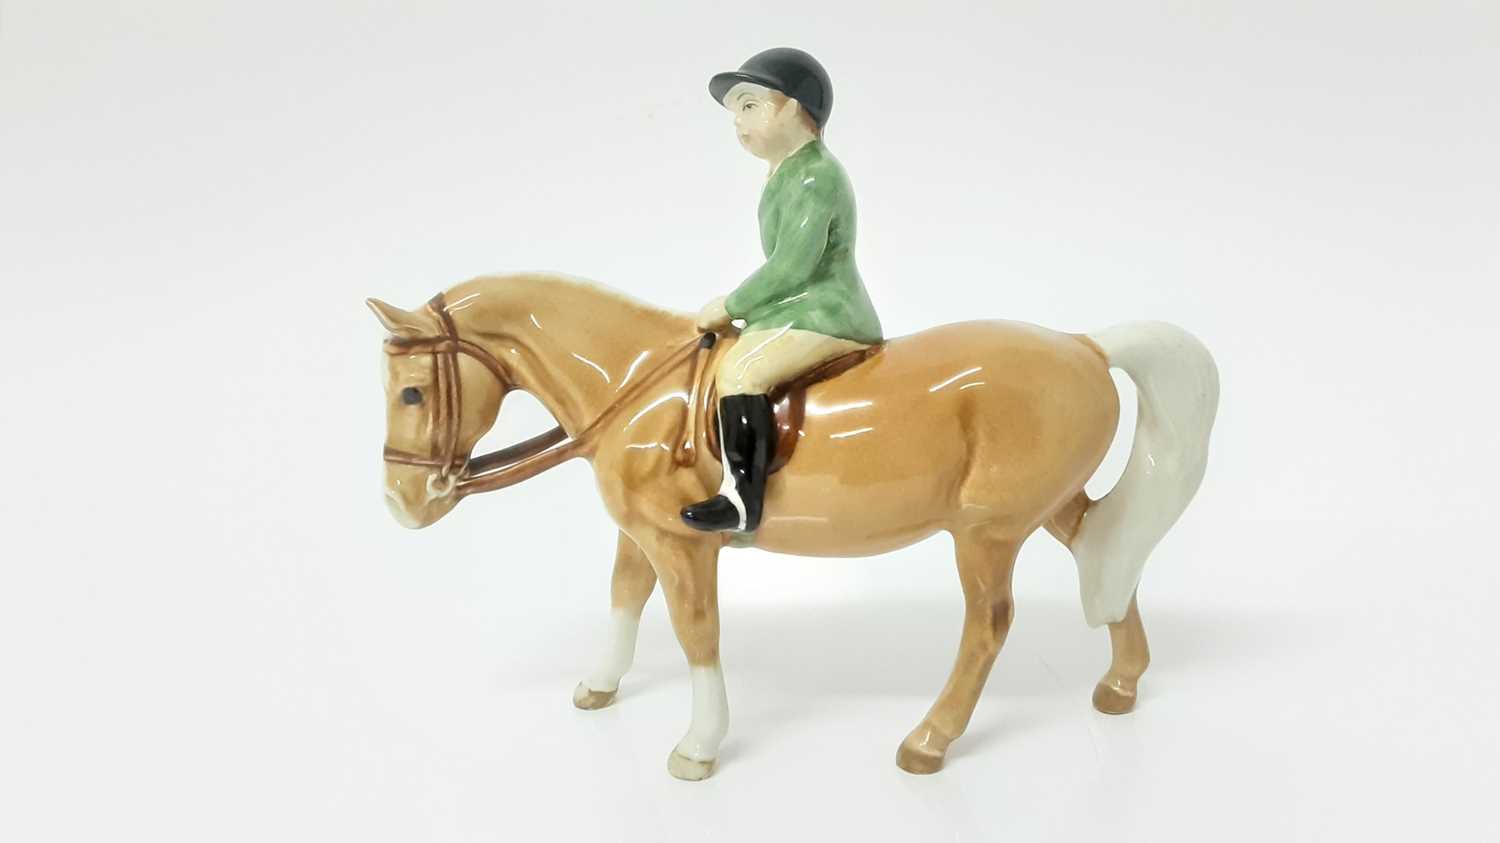 Lot 15 - Beswick Boy on Pony, model no. 1500, designed by Arthur Gredington, 14cm in height